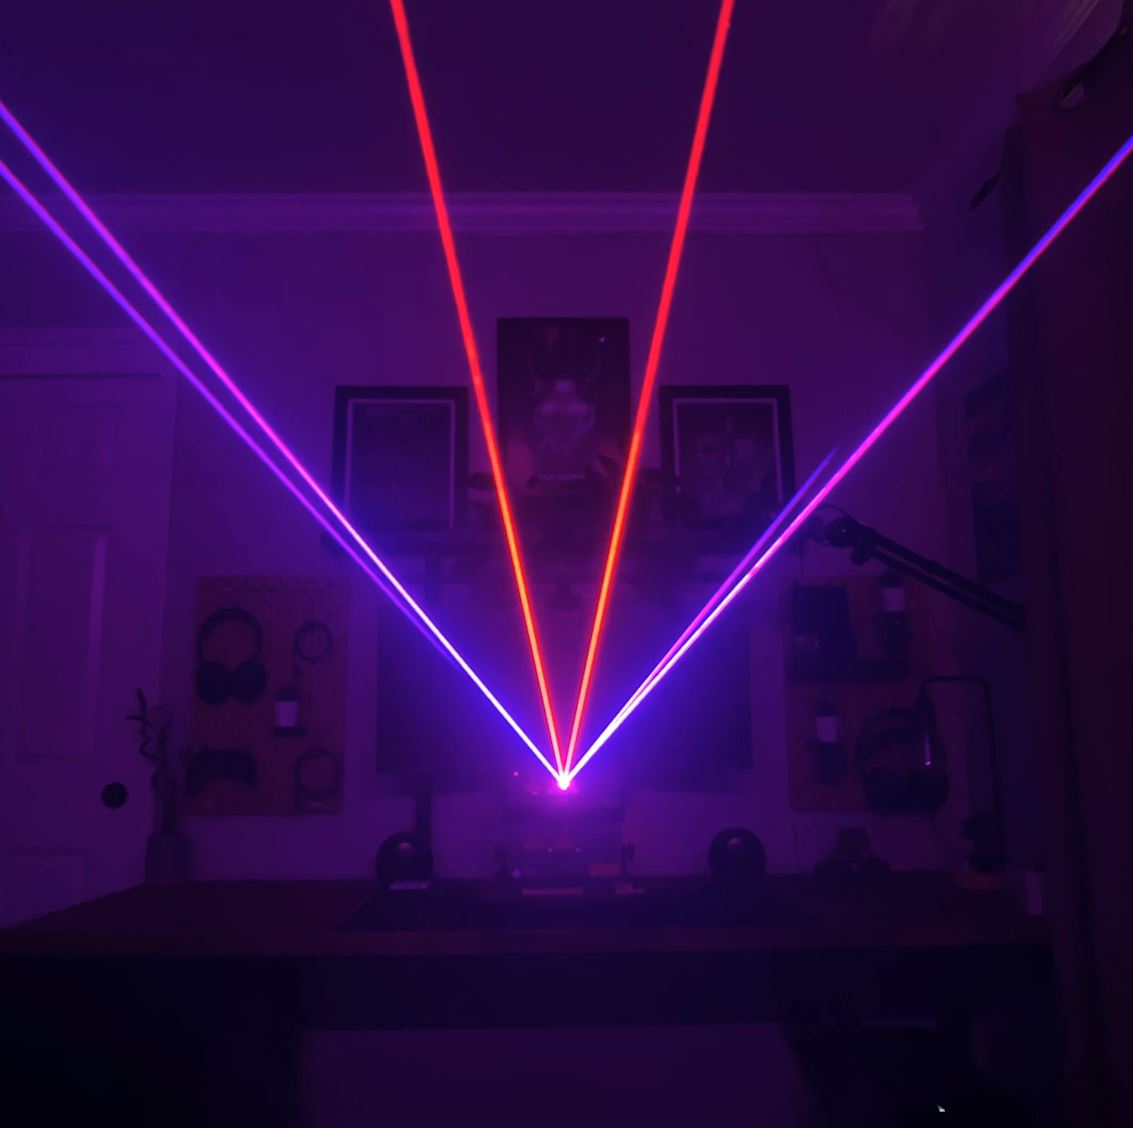 purple laser beam